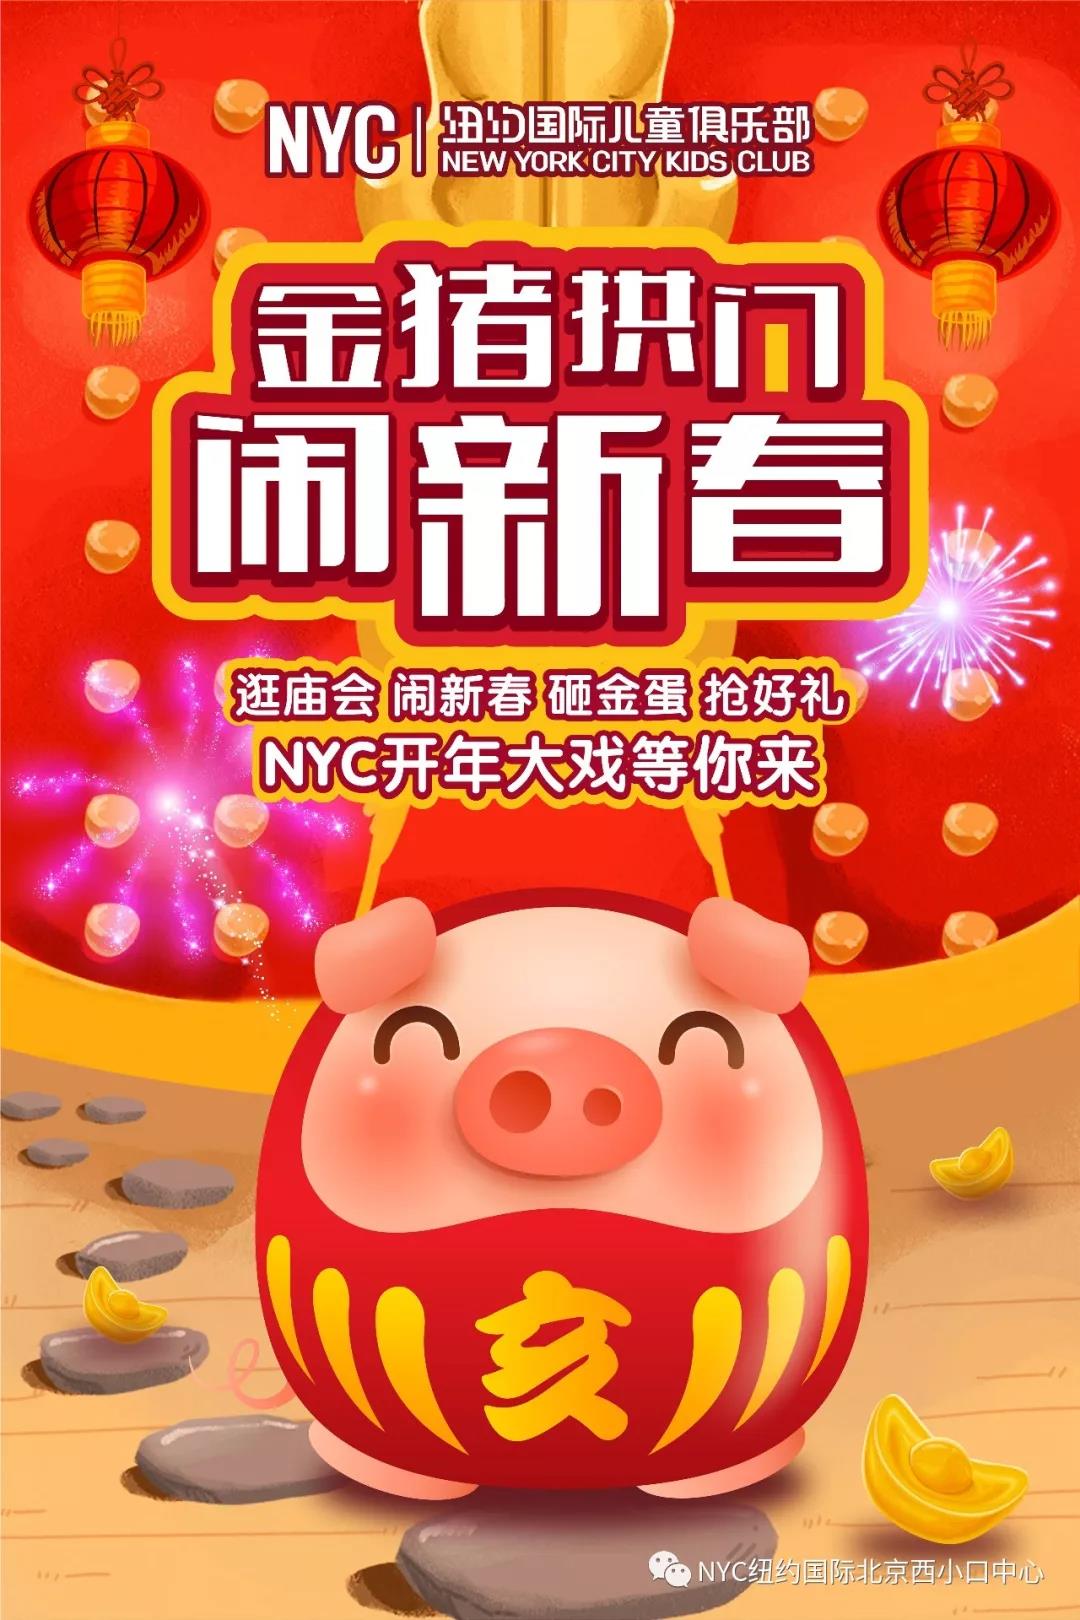 NYC纽约国际北京西小口早教中心：【1月活动预告】喜迎2019，欢度新春